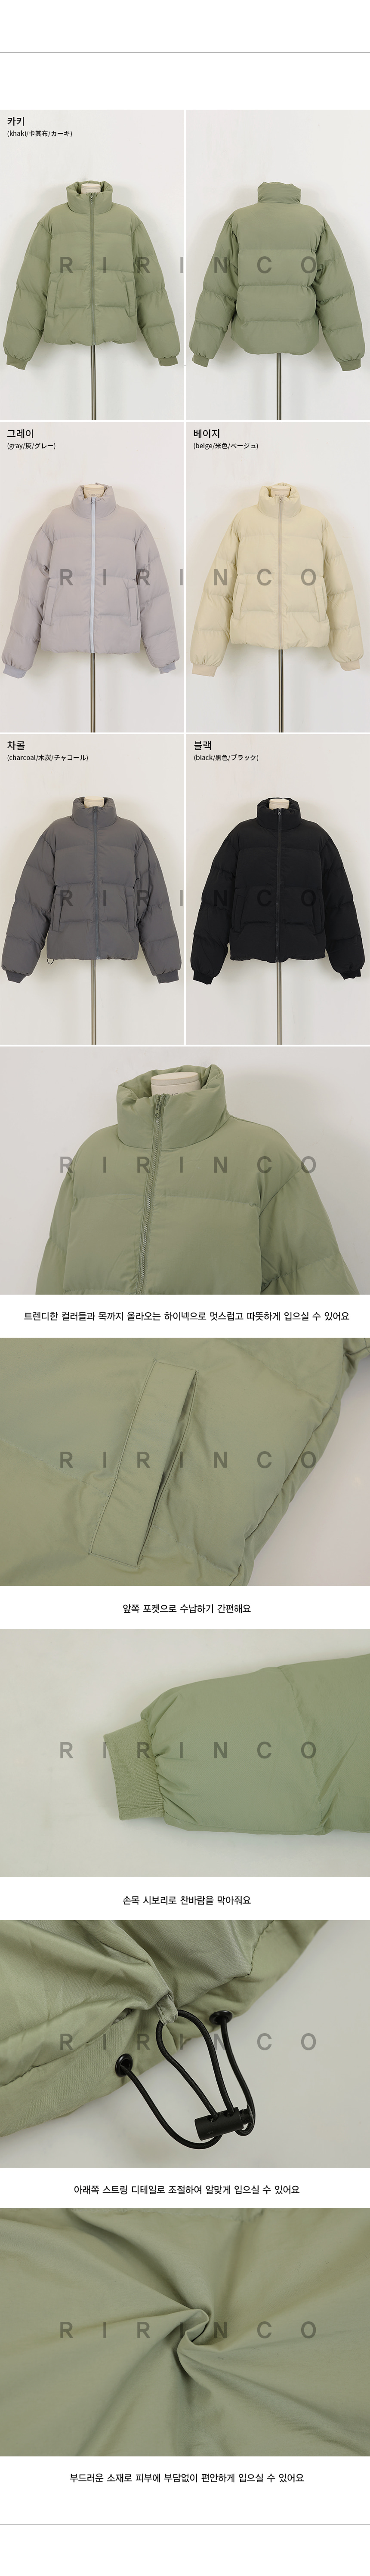 RIRINCO [カップル/ペアルック] オーバーサイズショートボリュームジャケット